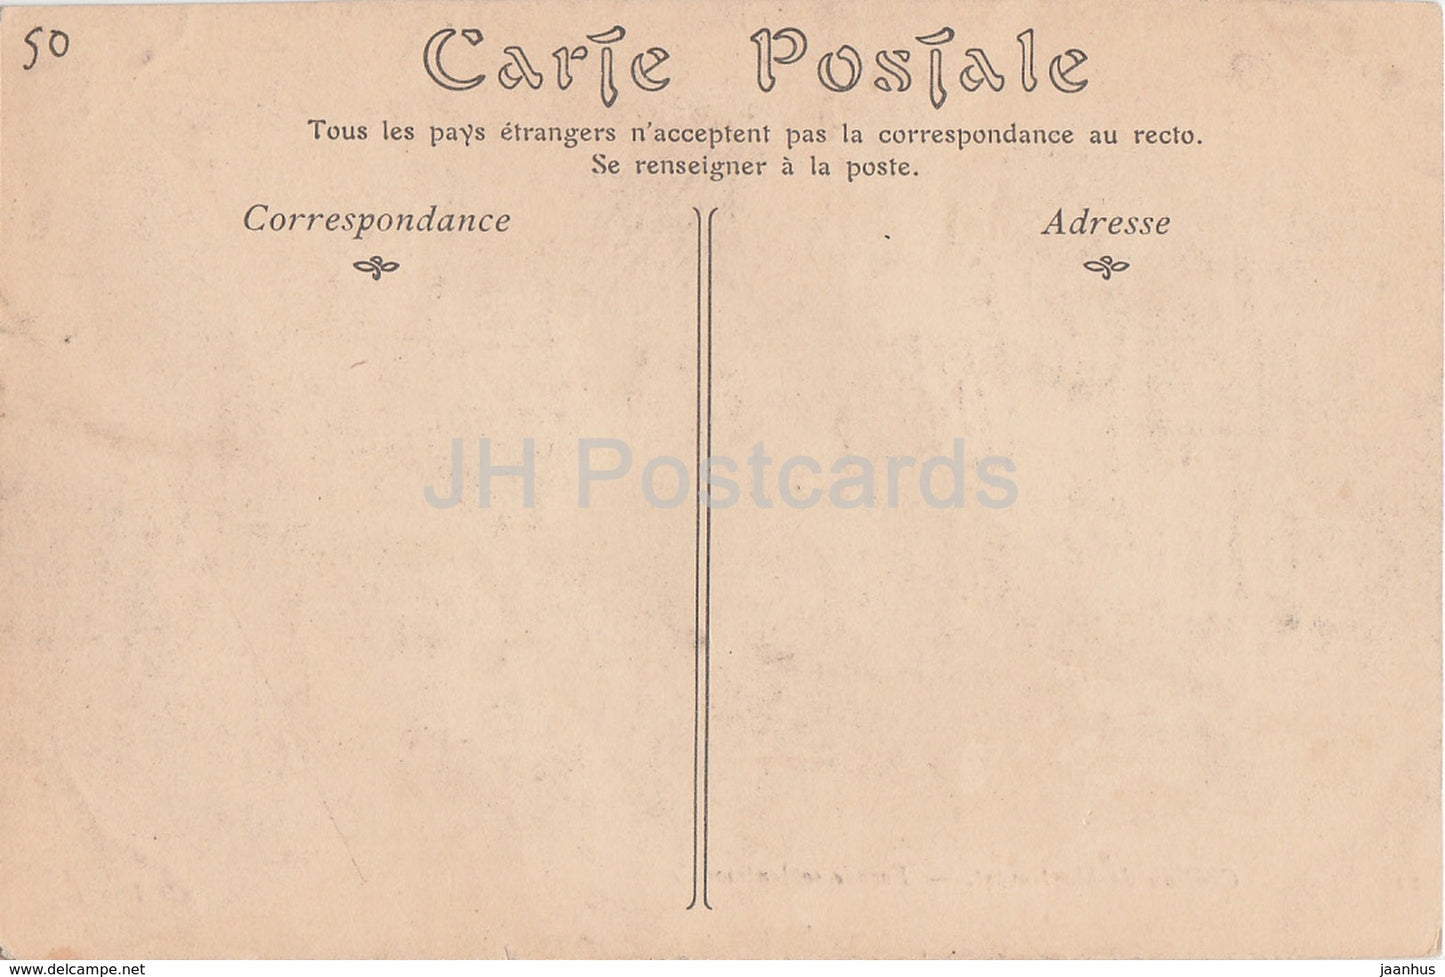 Chateau de Martinvast - Facade septentrionale - castle - 22 - old postcard - France - unused